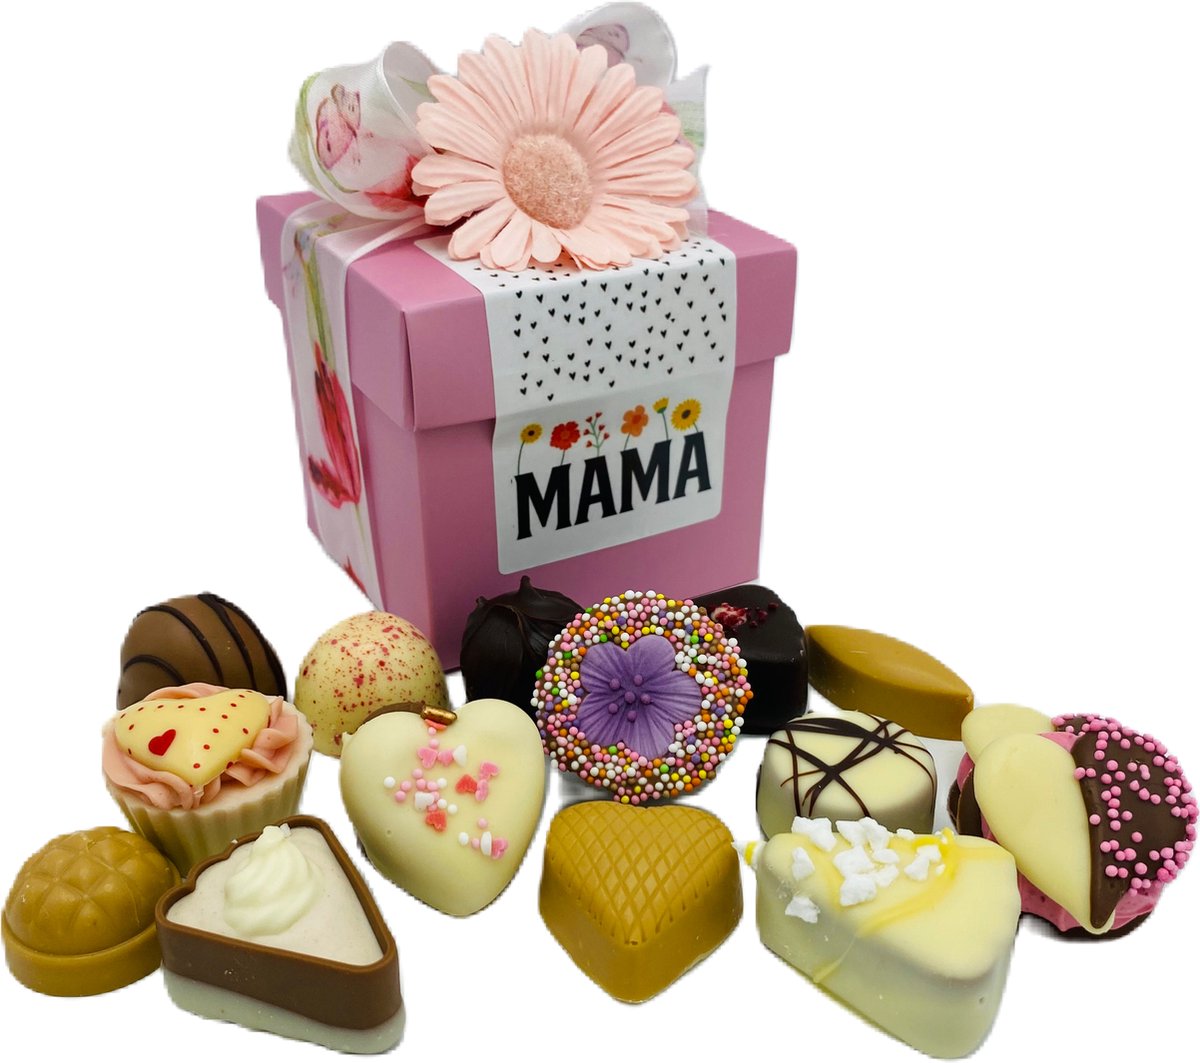 Cho-lala Moederdag cadeaubox MAMA - Chocolade cadeau Moederdag - Roze cadeaubox - 350 gram Moederdag bonbons - chocolade cadeau voor haar - Lente chocolade - Moederdag chocolade harten - Chocolade cadeau voor Moederdag - Cho-lala